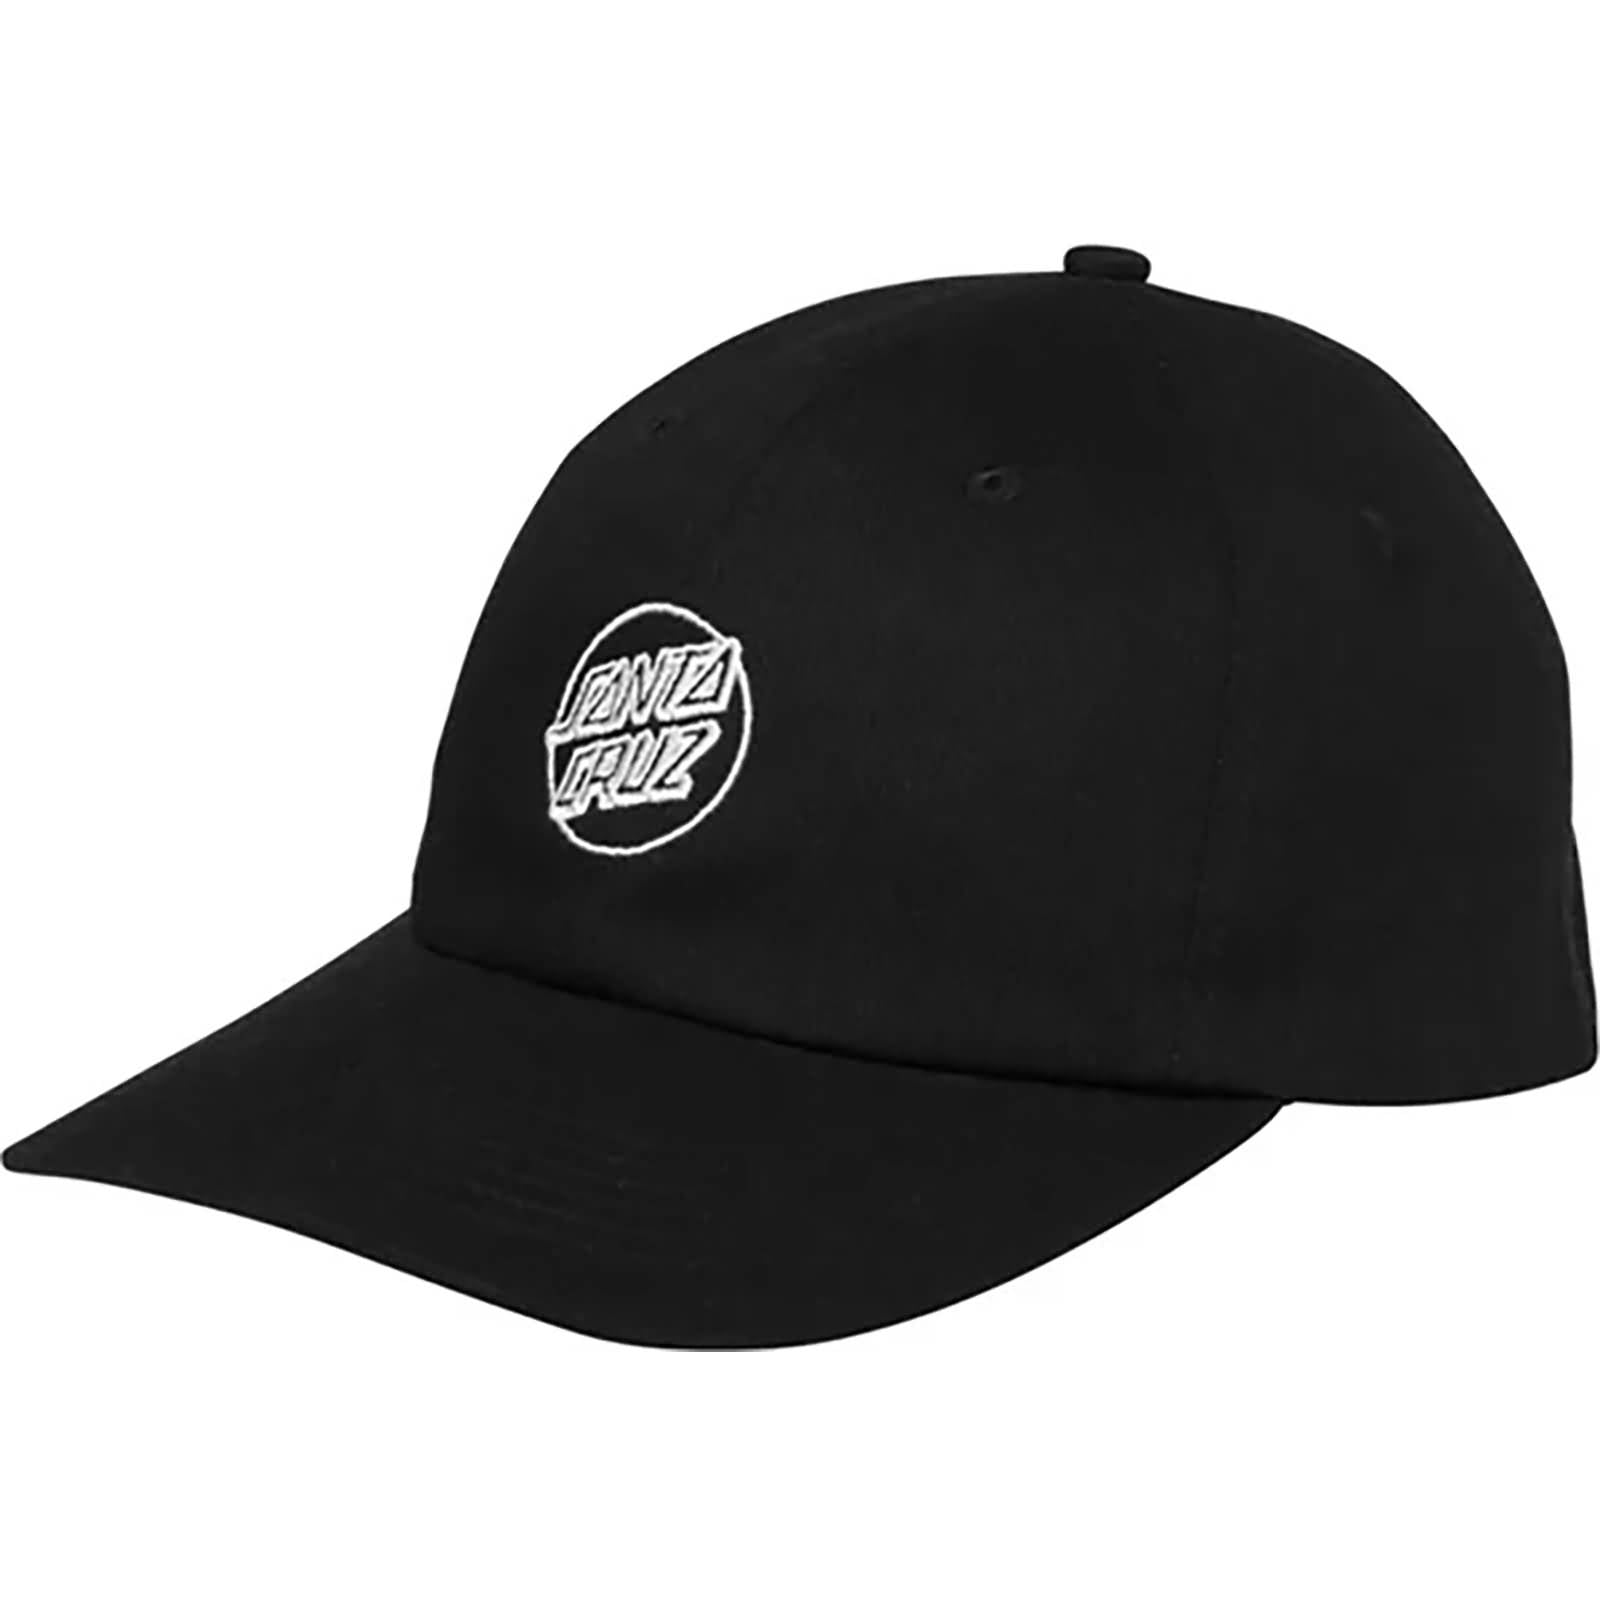 Santa Cruz Venture Opus Eco Men's Adjustable Hats (Brand New